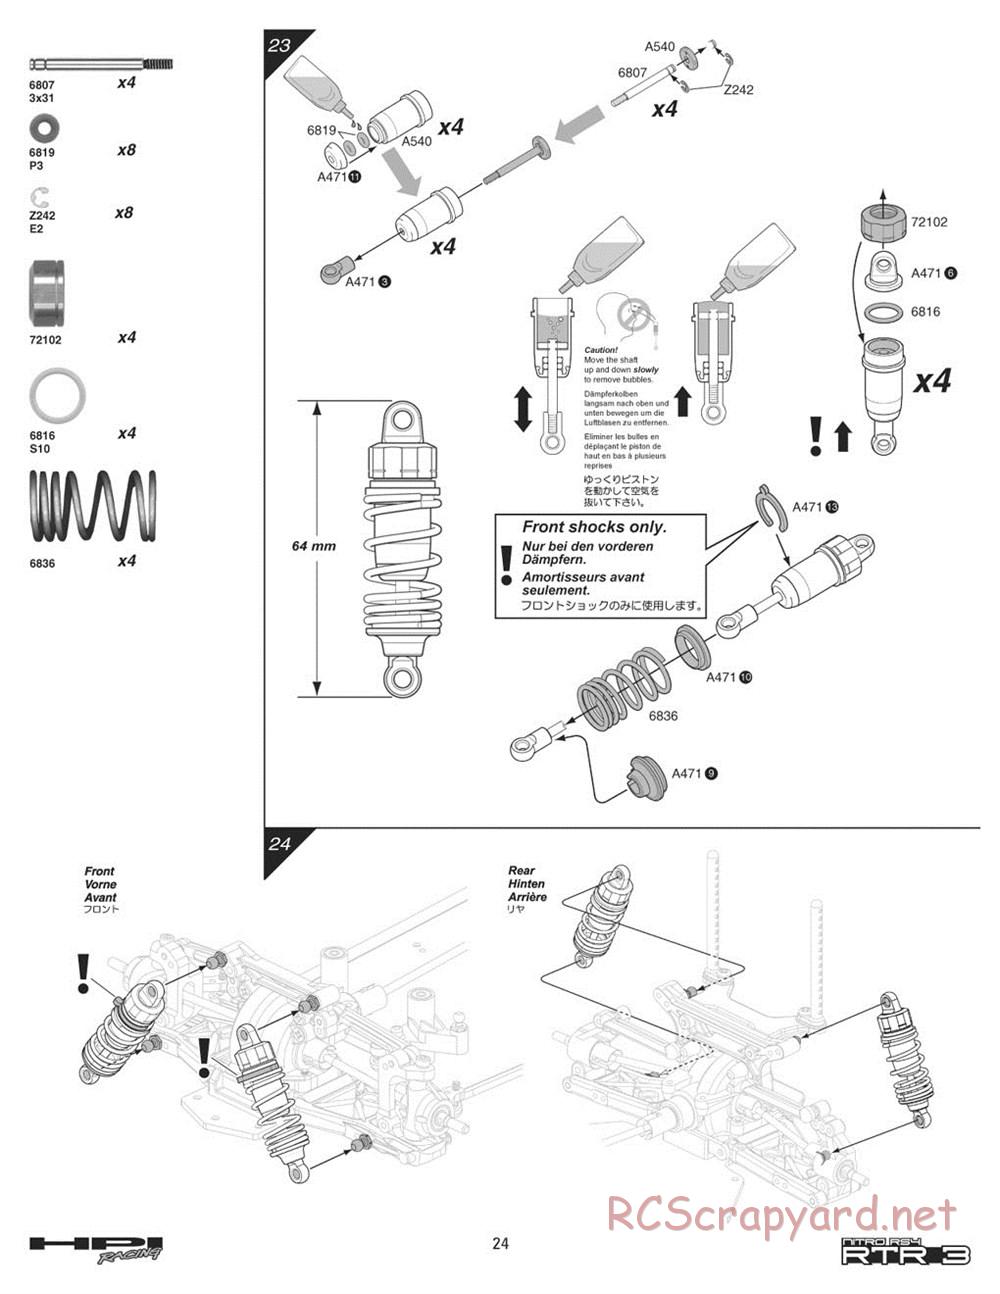 HPI - Nitro RS4 3 - Manual - Page 24